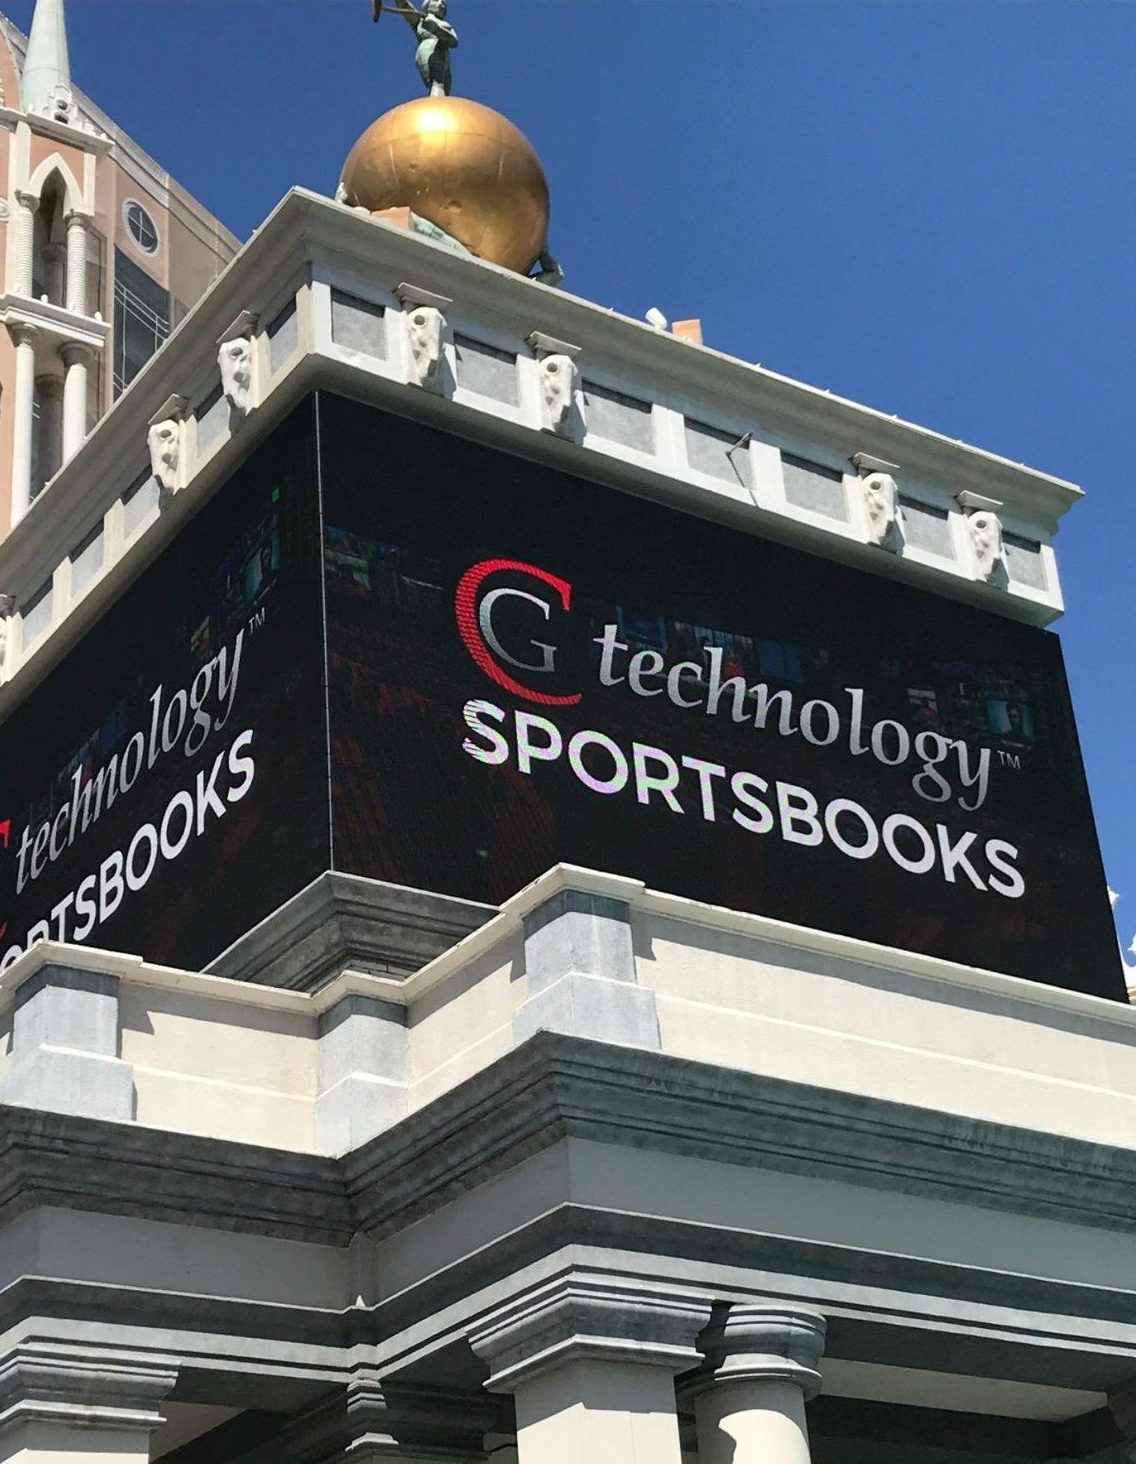 CG Technology Sportsbooks, at the Venetian